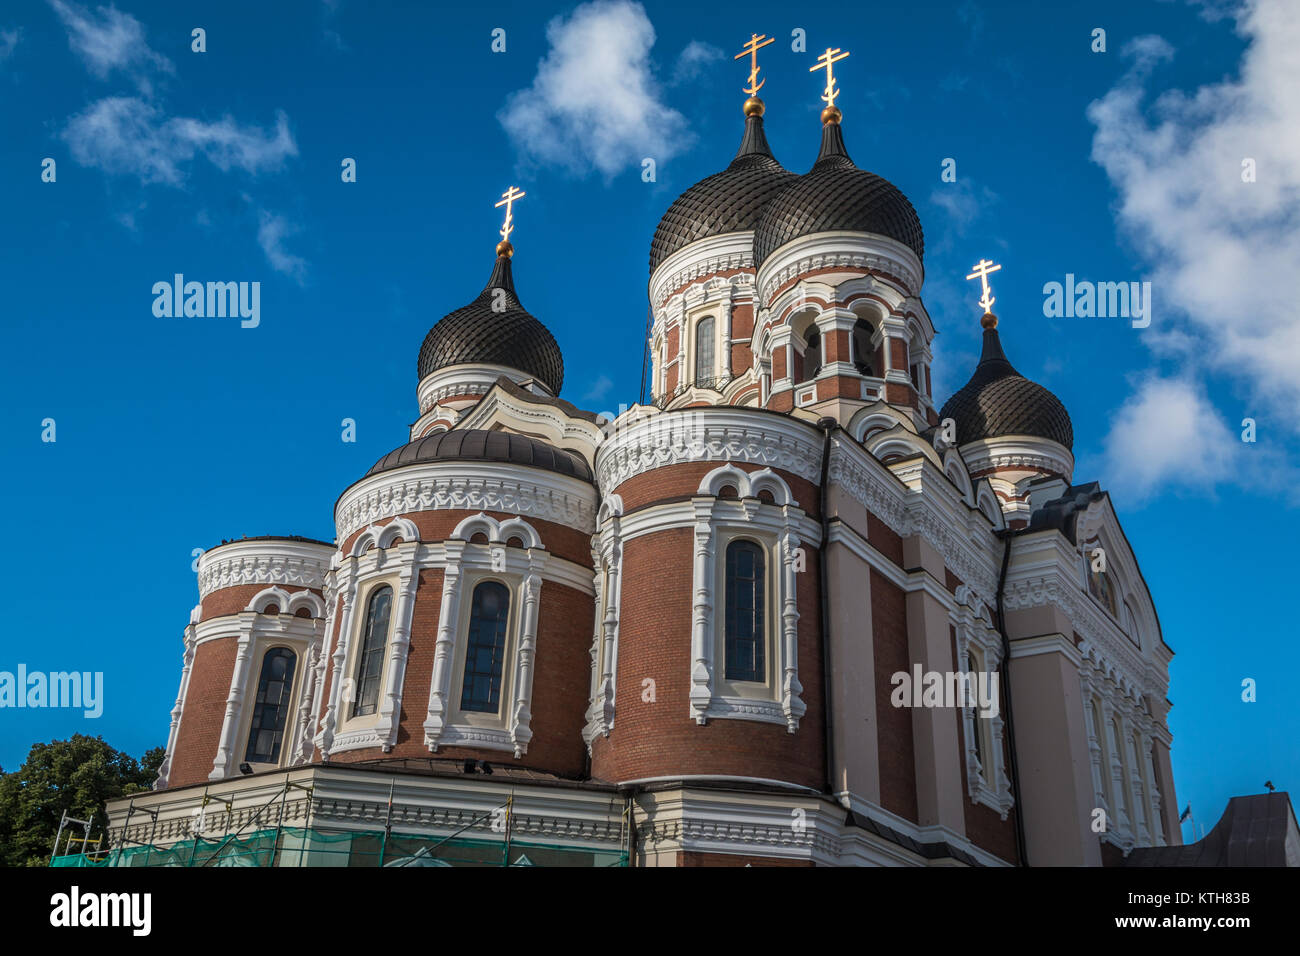 Tallinn Orthodox church in Estonia Stock Photo